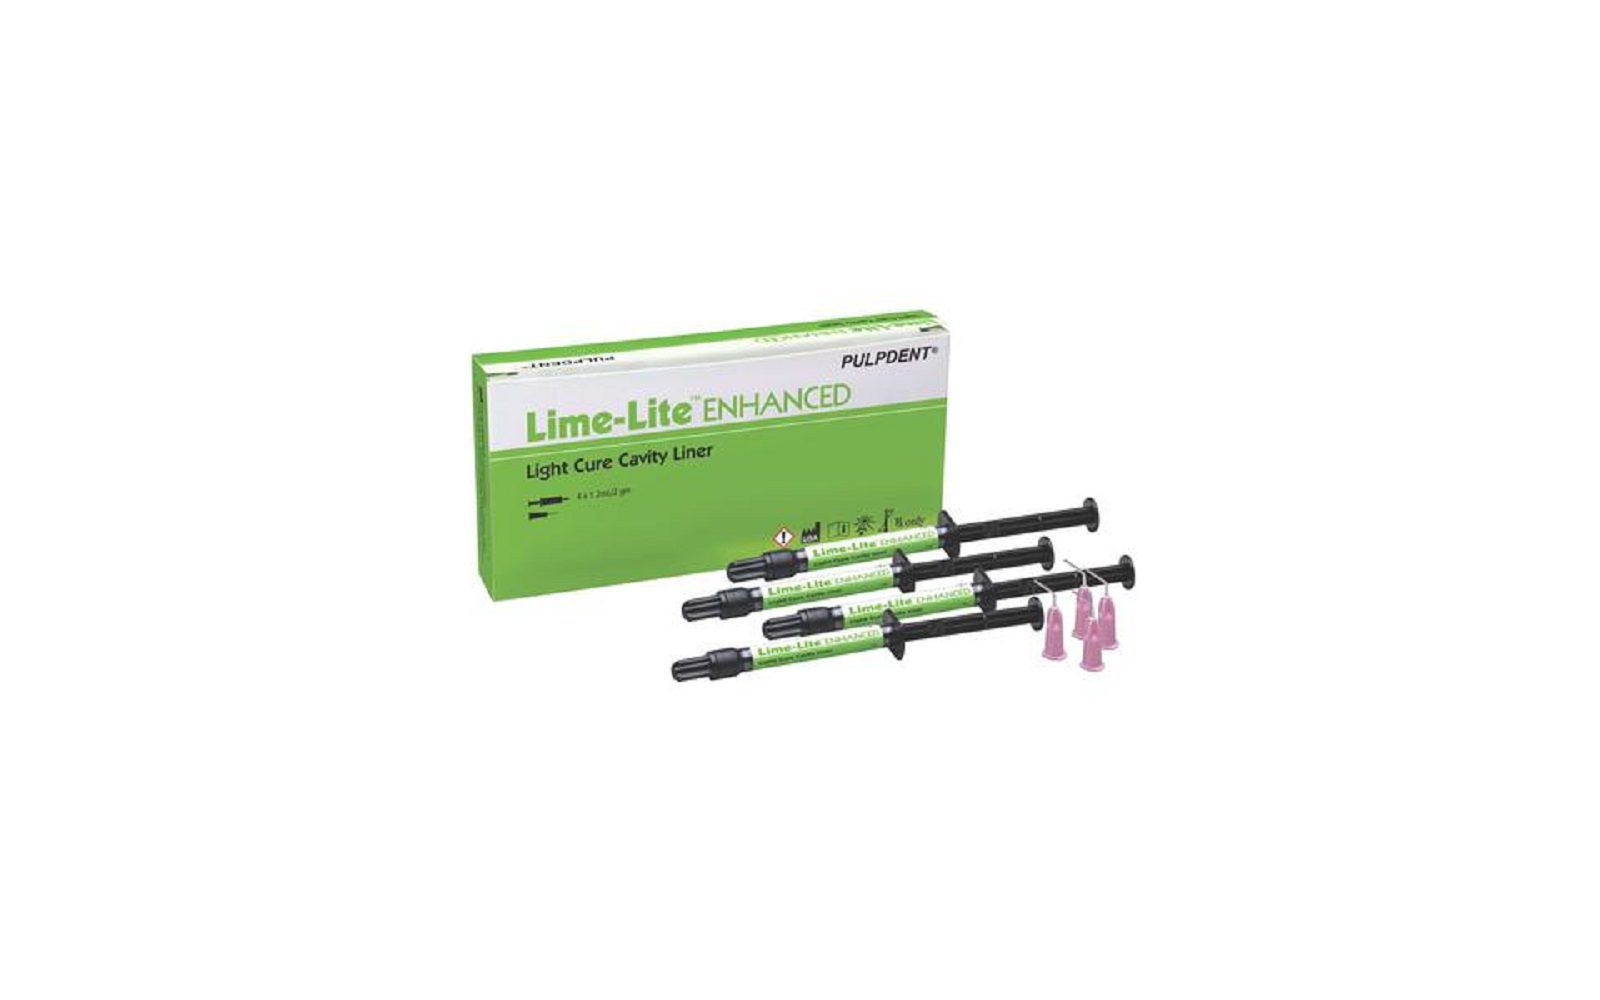 Lime-lite™ enhanced light cure cavity liner kit